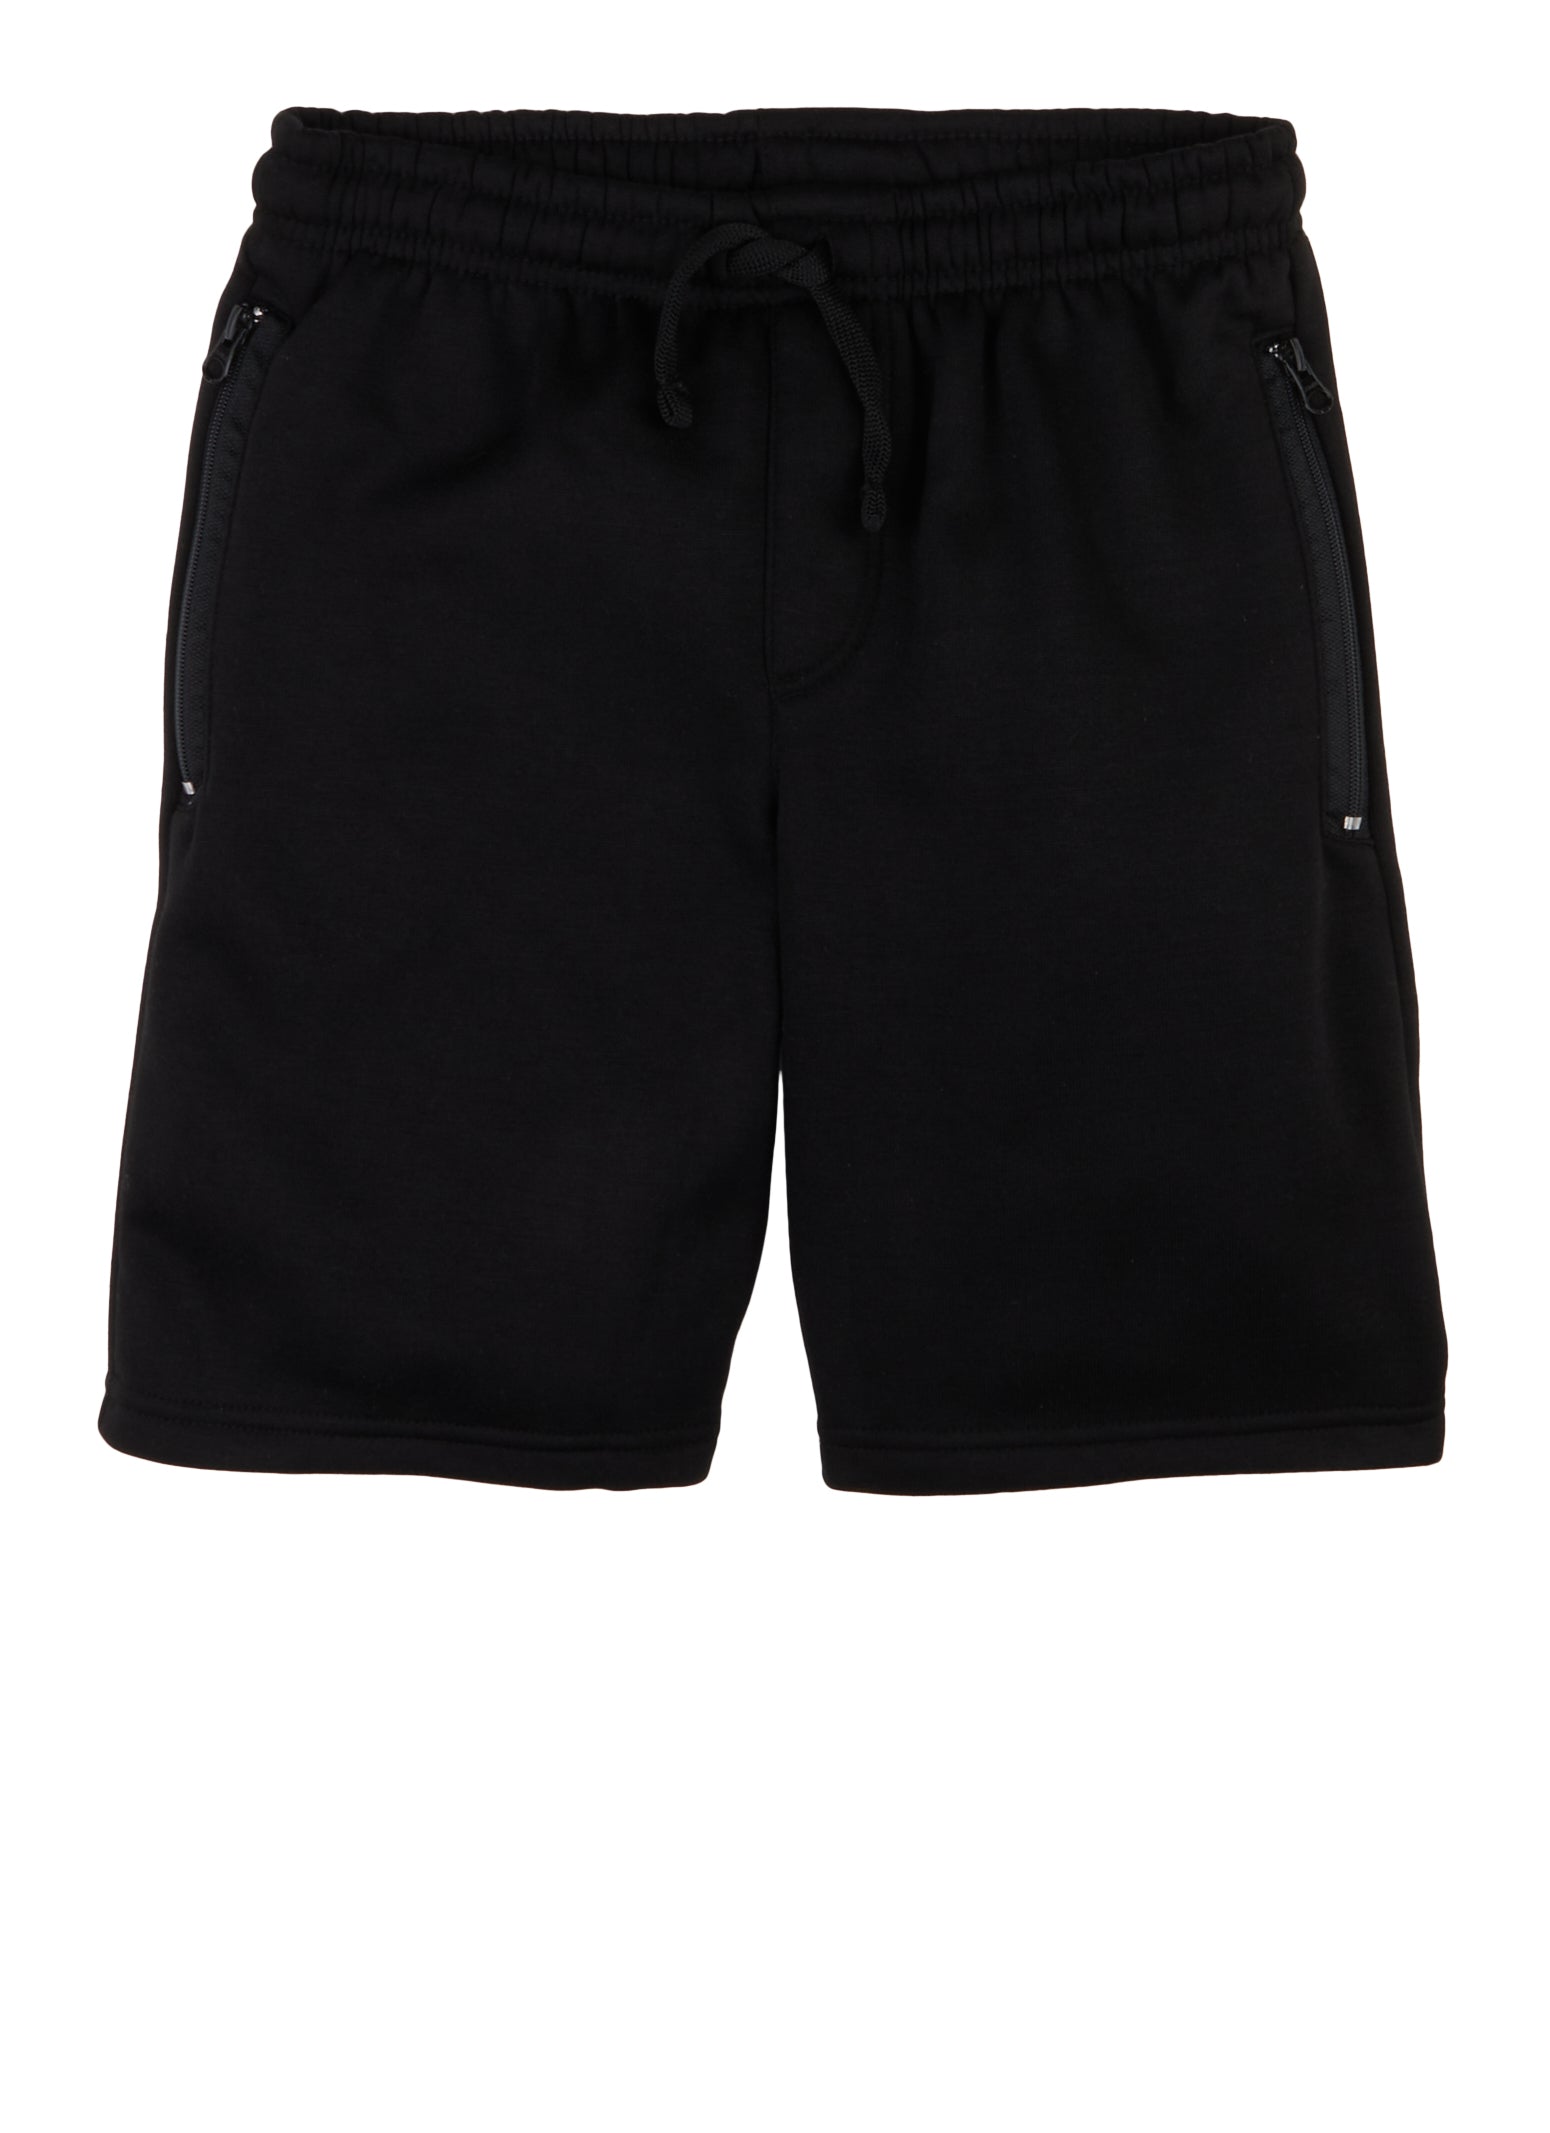 Boys Fleece Solid Drawstring Zipper Pocket Shorts, Black, Size 10-12